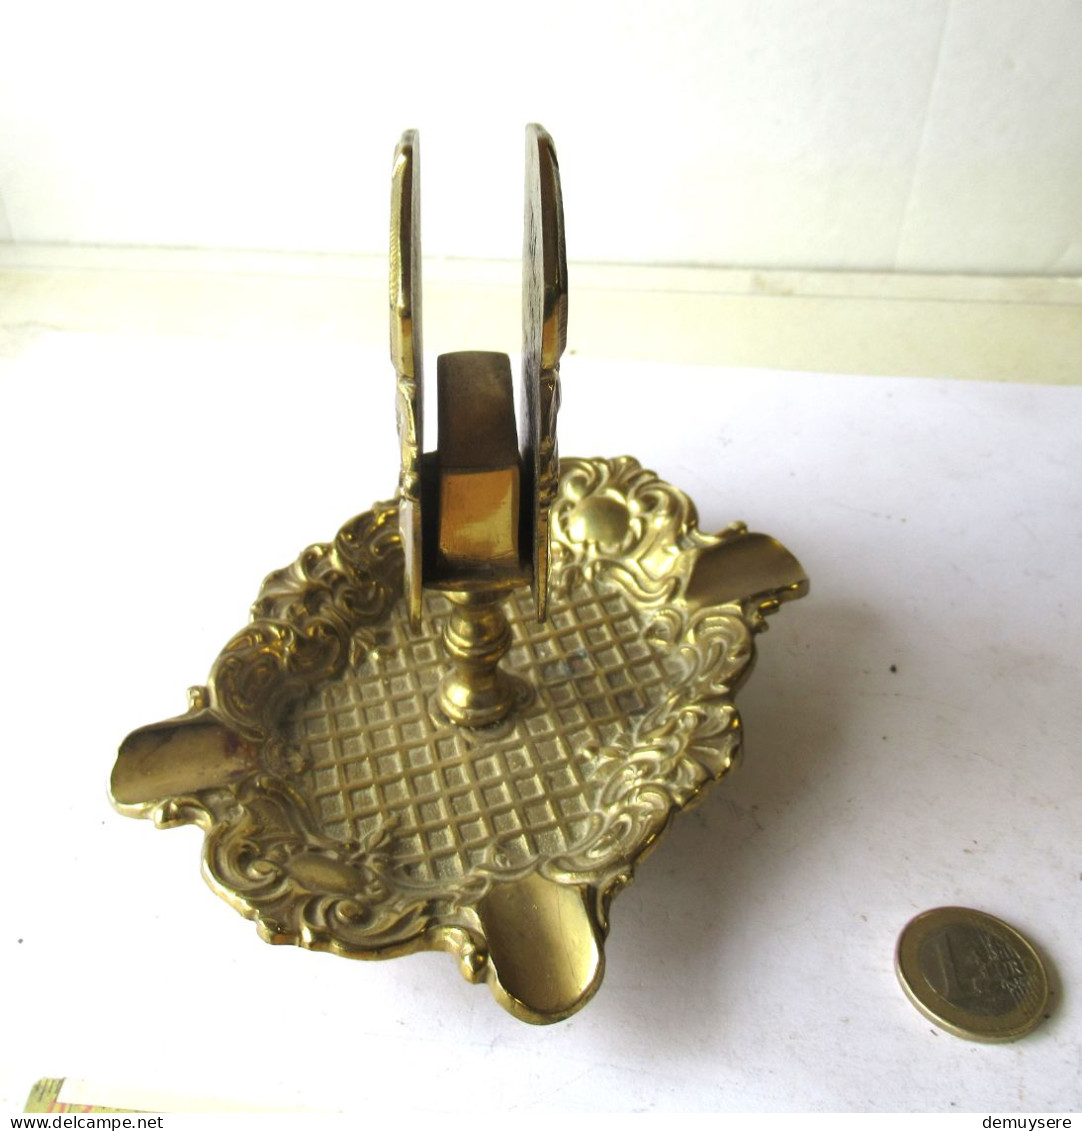 Lade 4000 - Bronzen Asbak Met Luciferhouder - Cendrier En Bronze Avec Porte Allumettes - 500 Gram - Bronzen